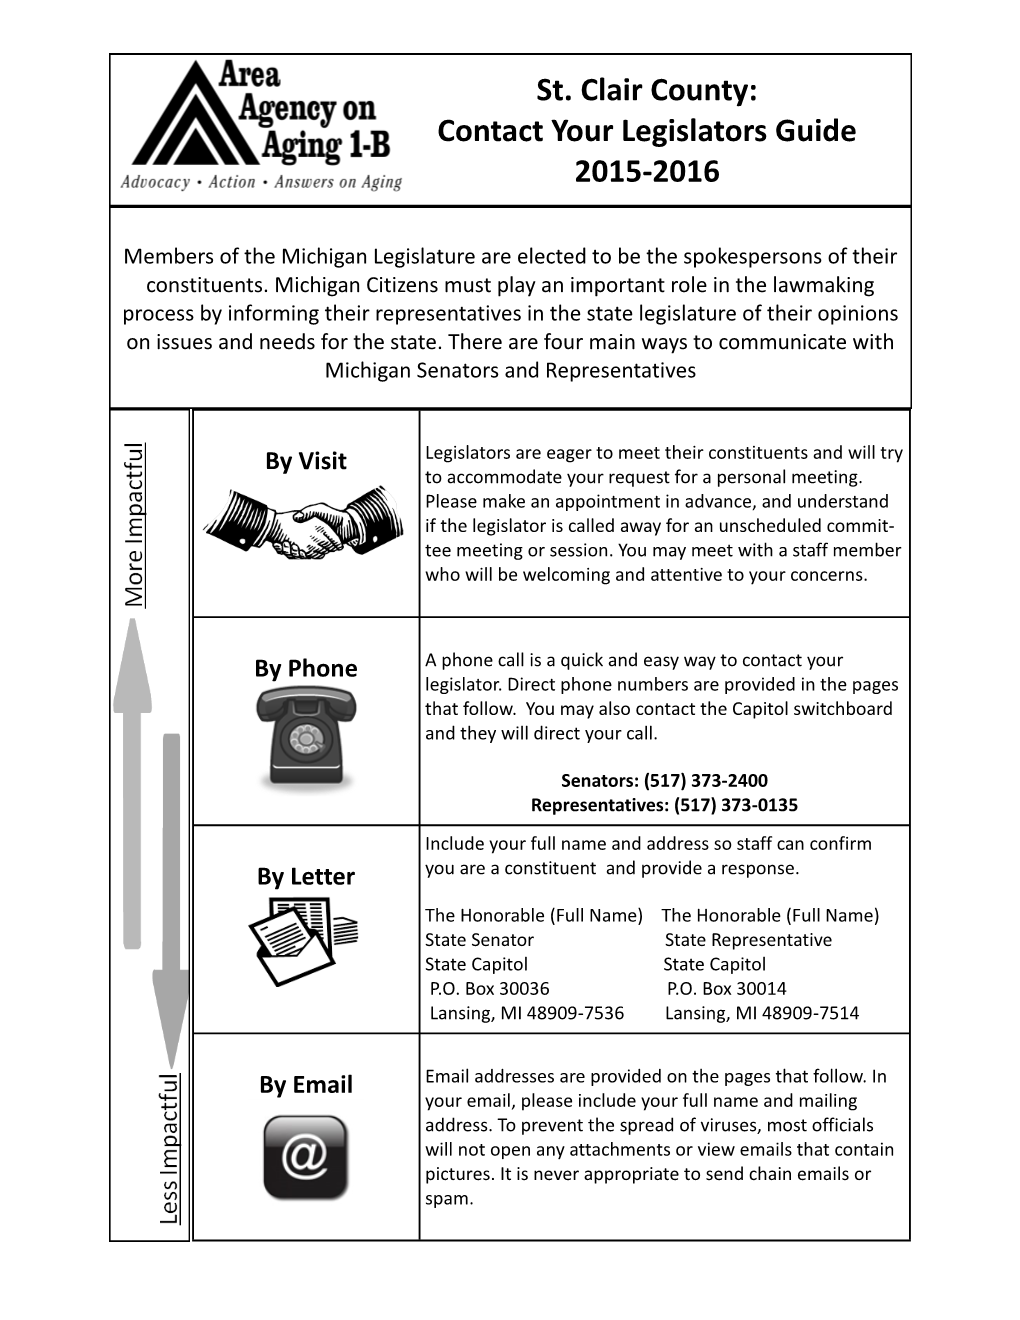 St. Clair County: Contact Your Legislators Guide 2015-2016